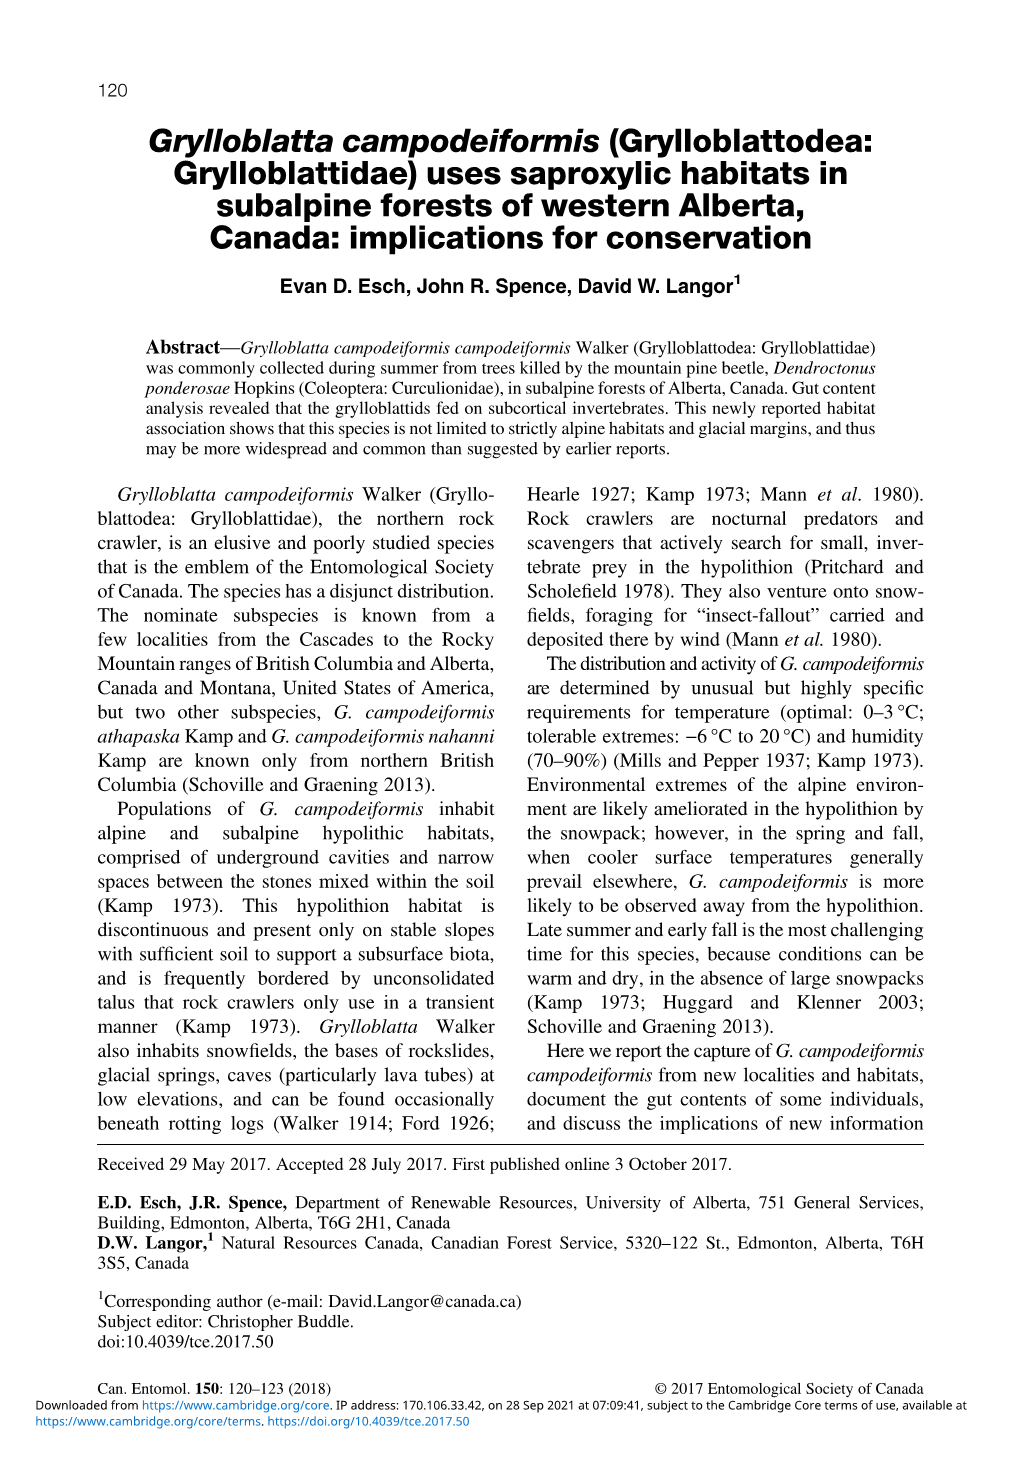 Grylloblatta Campodeiformis (Grylloblattodea: Grylloblattidae) Uses Saproxylic Habitats in Subalpine Forests of Western Alberta, Canada: Implications for Conservation